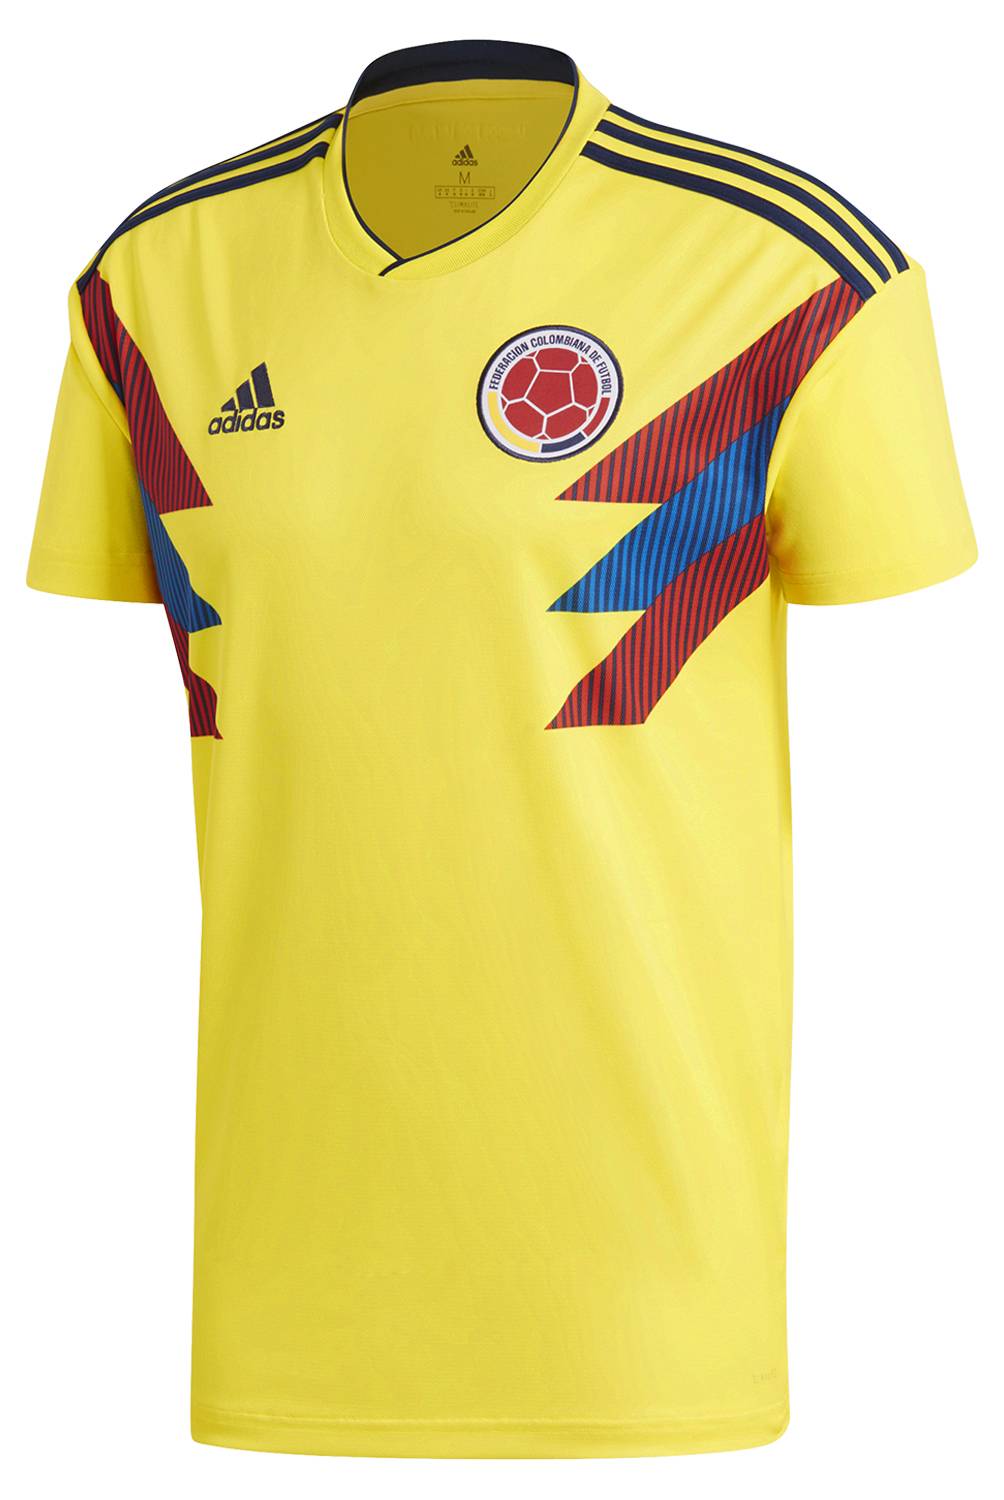 adidas - Camiseta Selección Colombia